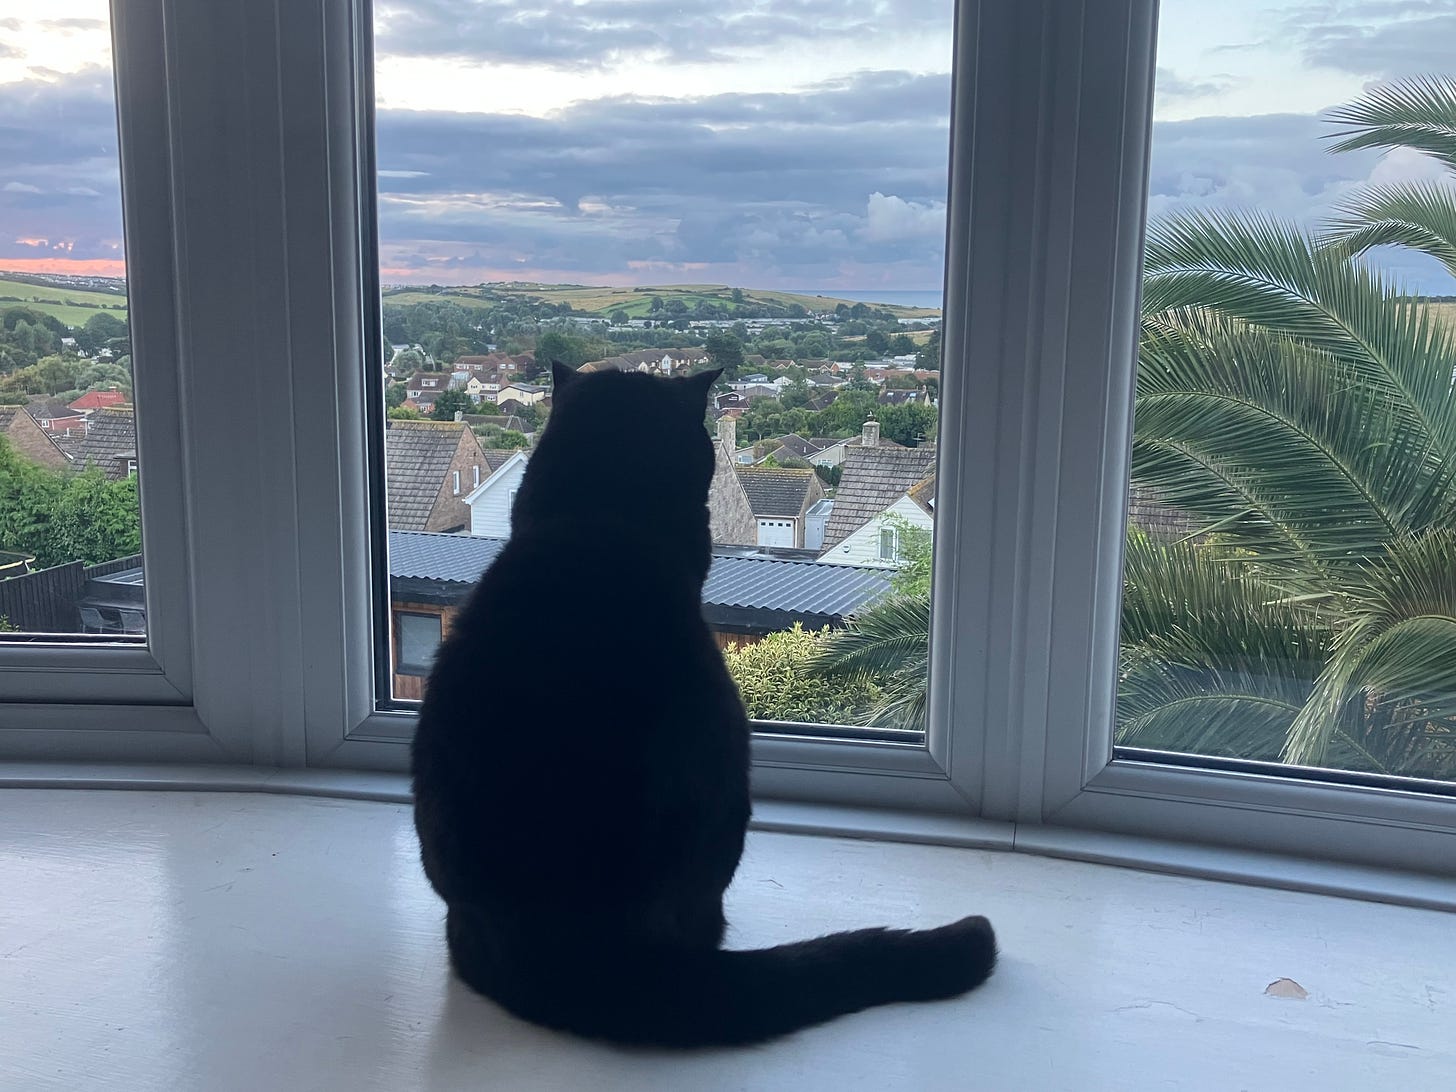 Black cat sitting in a window overlooking Weymouth in Dorset.